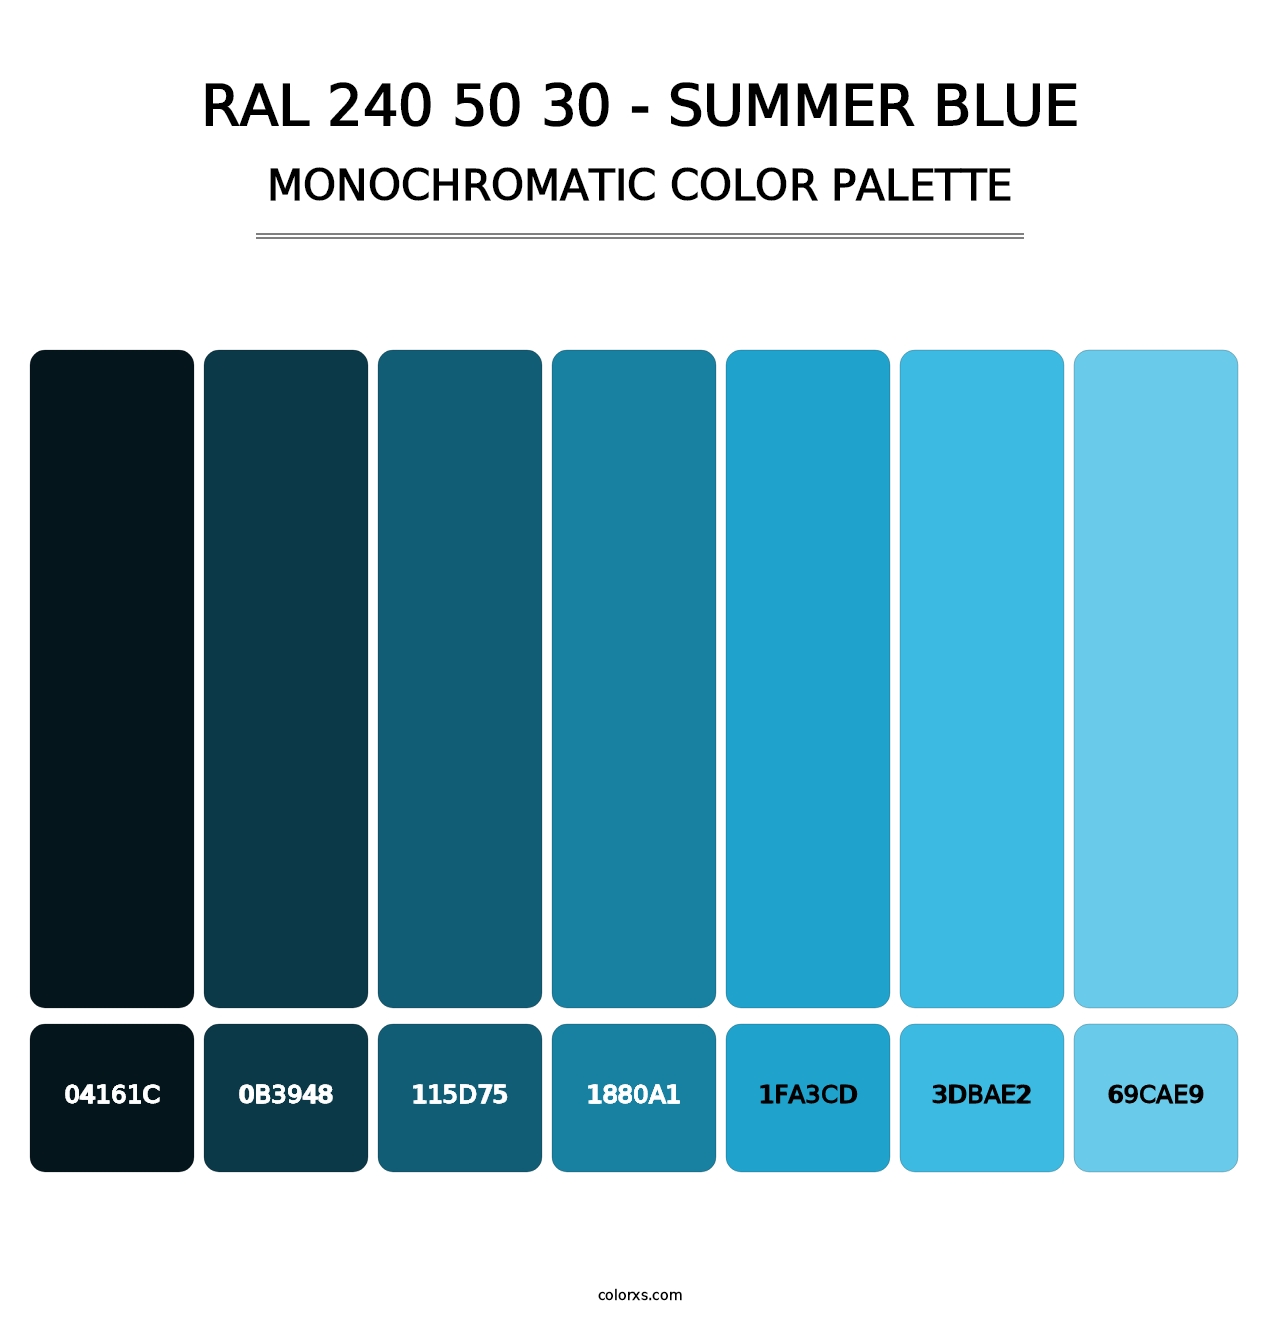 RAL 240 50 30 - Summer Blue - Monochromatic Color Palette